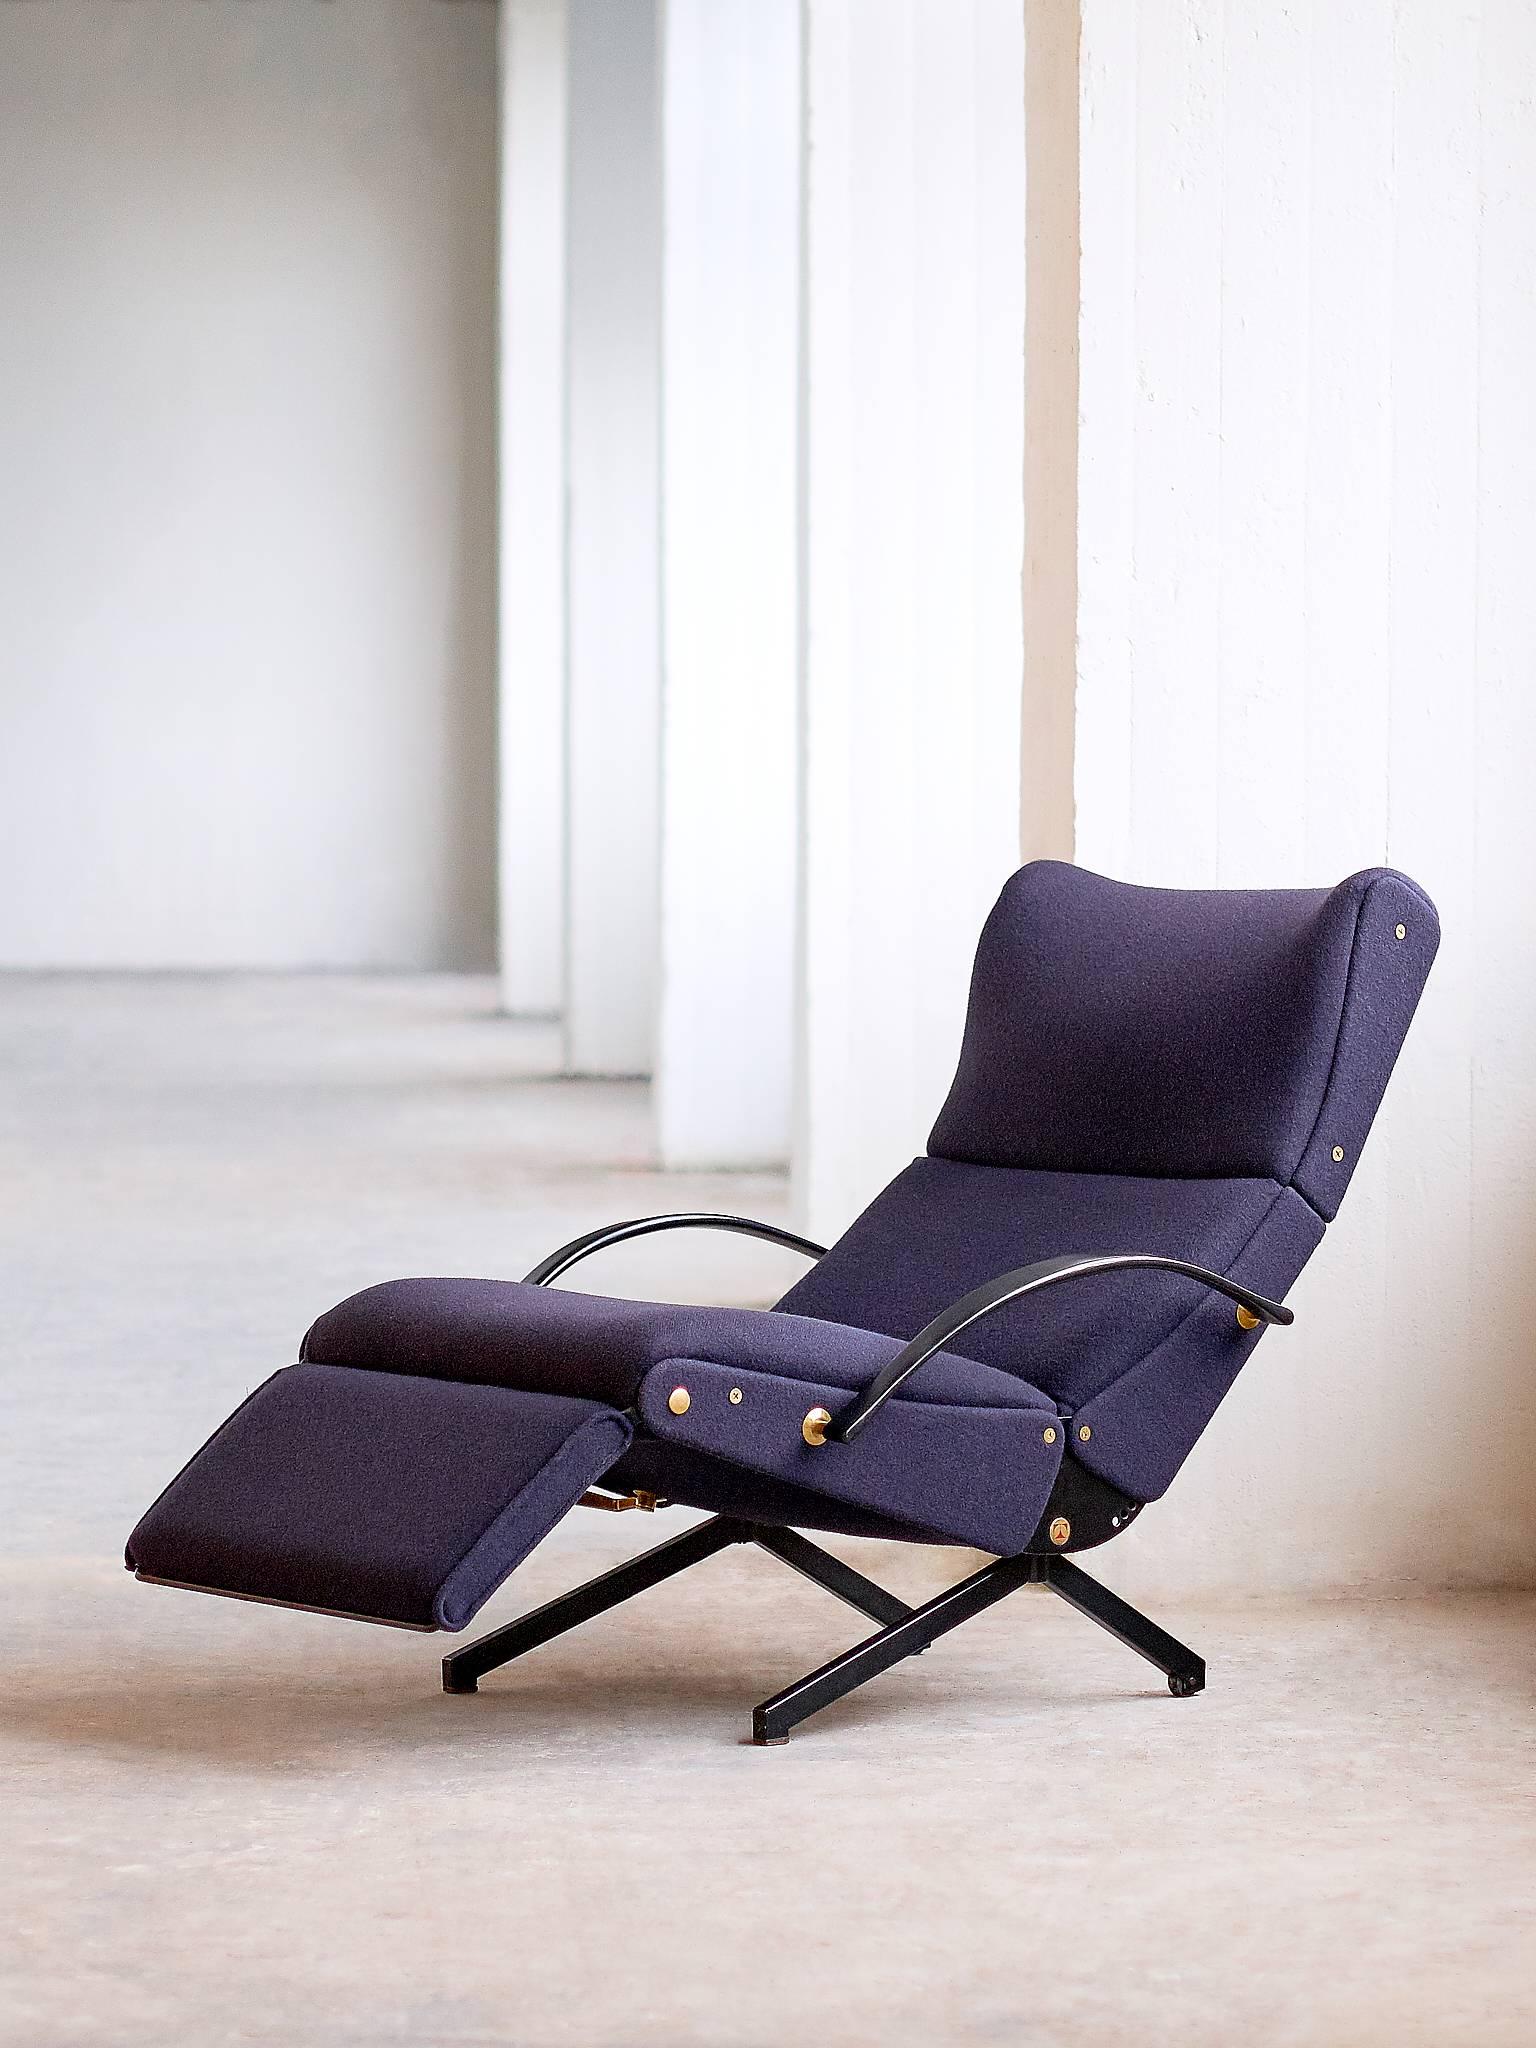 Osvaldo Borsani P40 Lounge Chair for Tecno 2